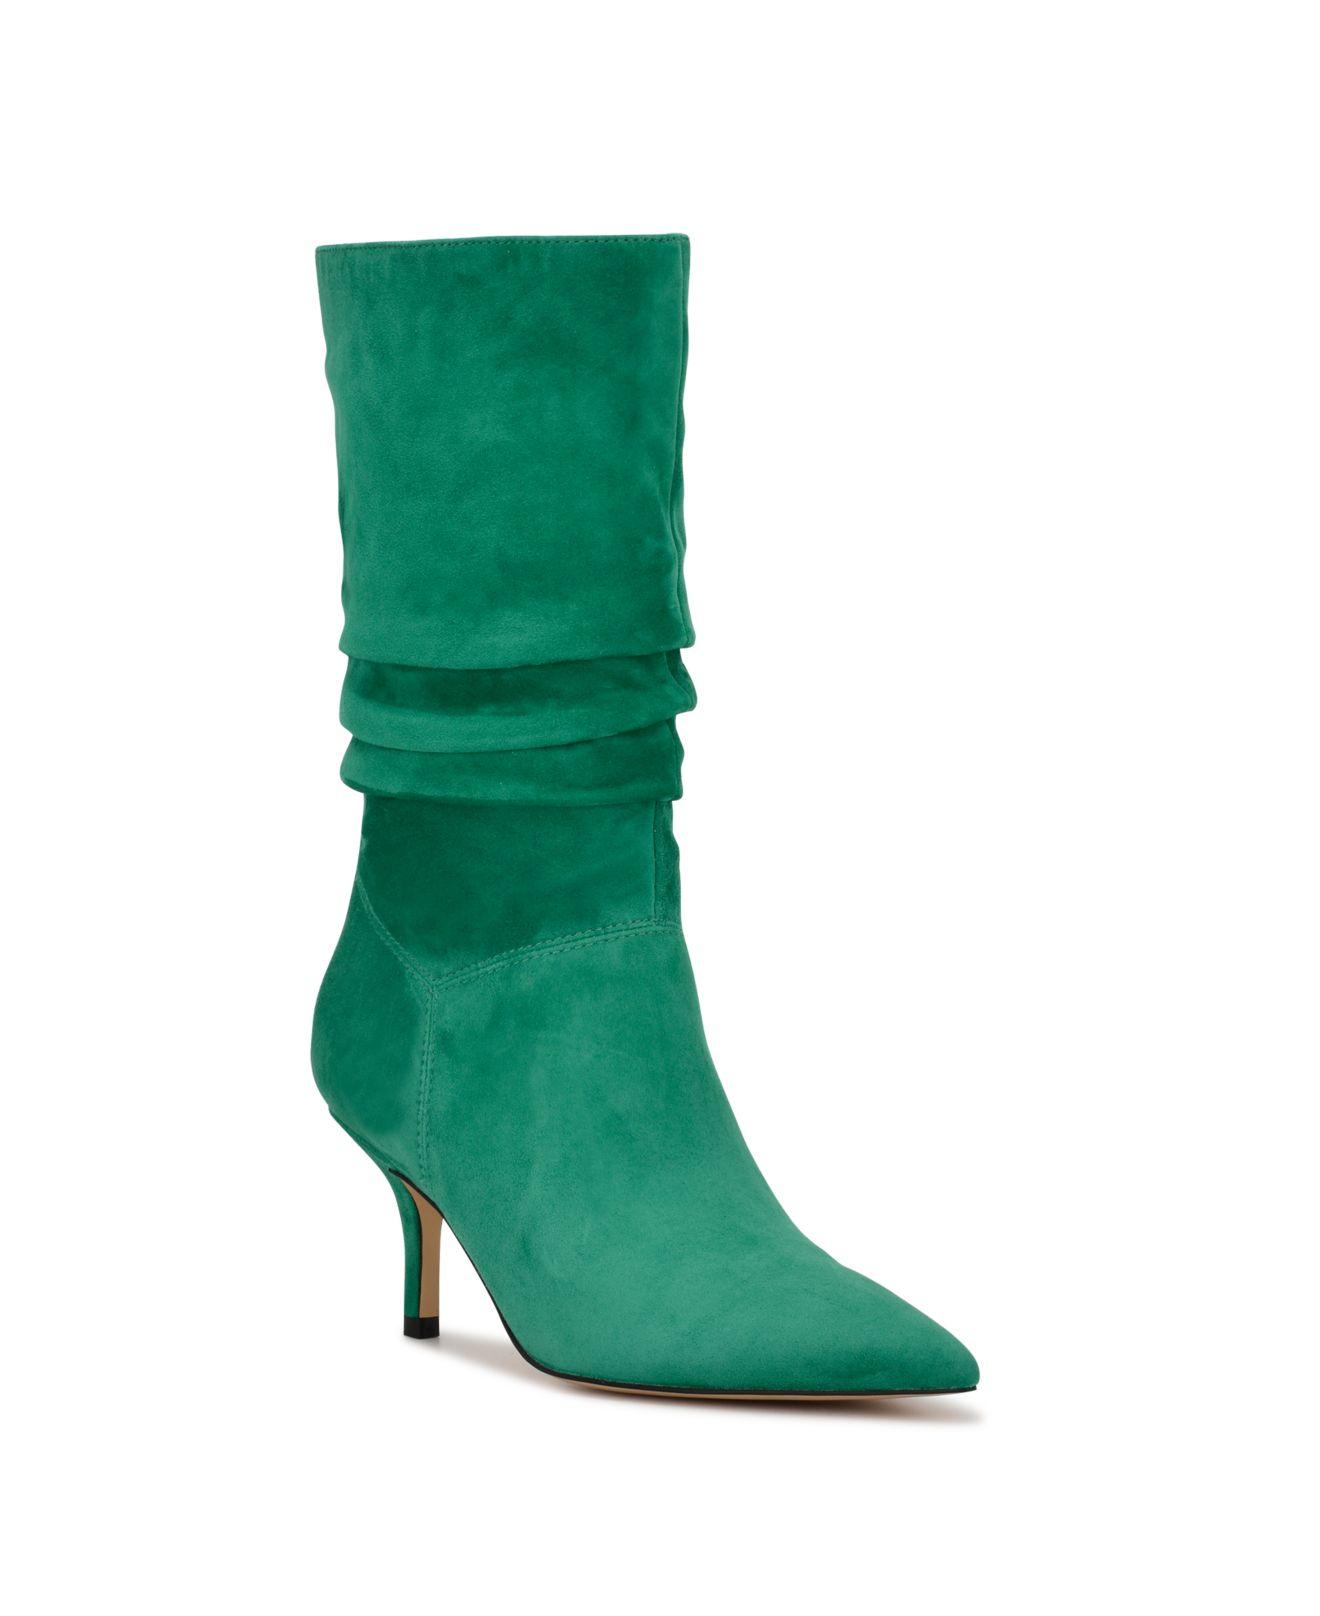 Nine West Mycki Dress Boots in Green | Lyst